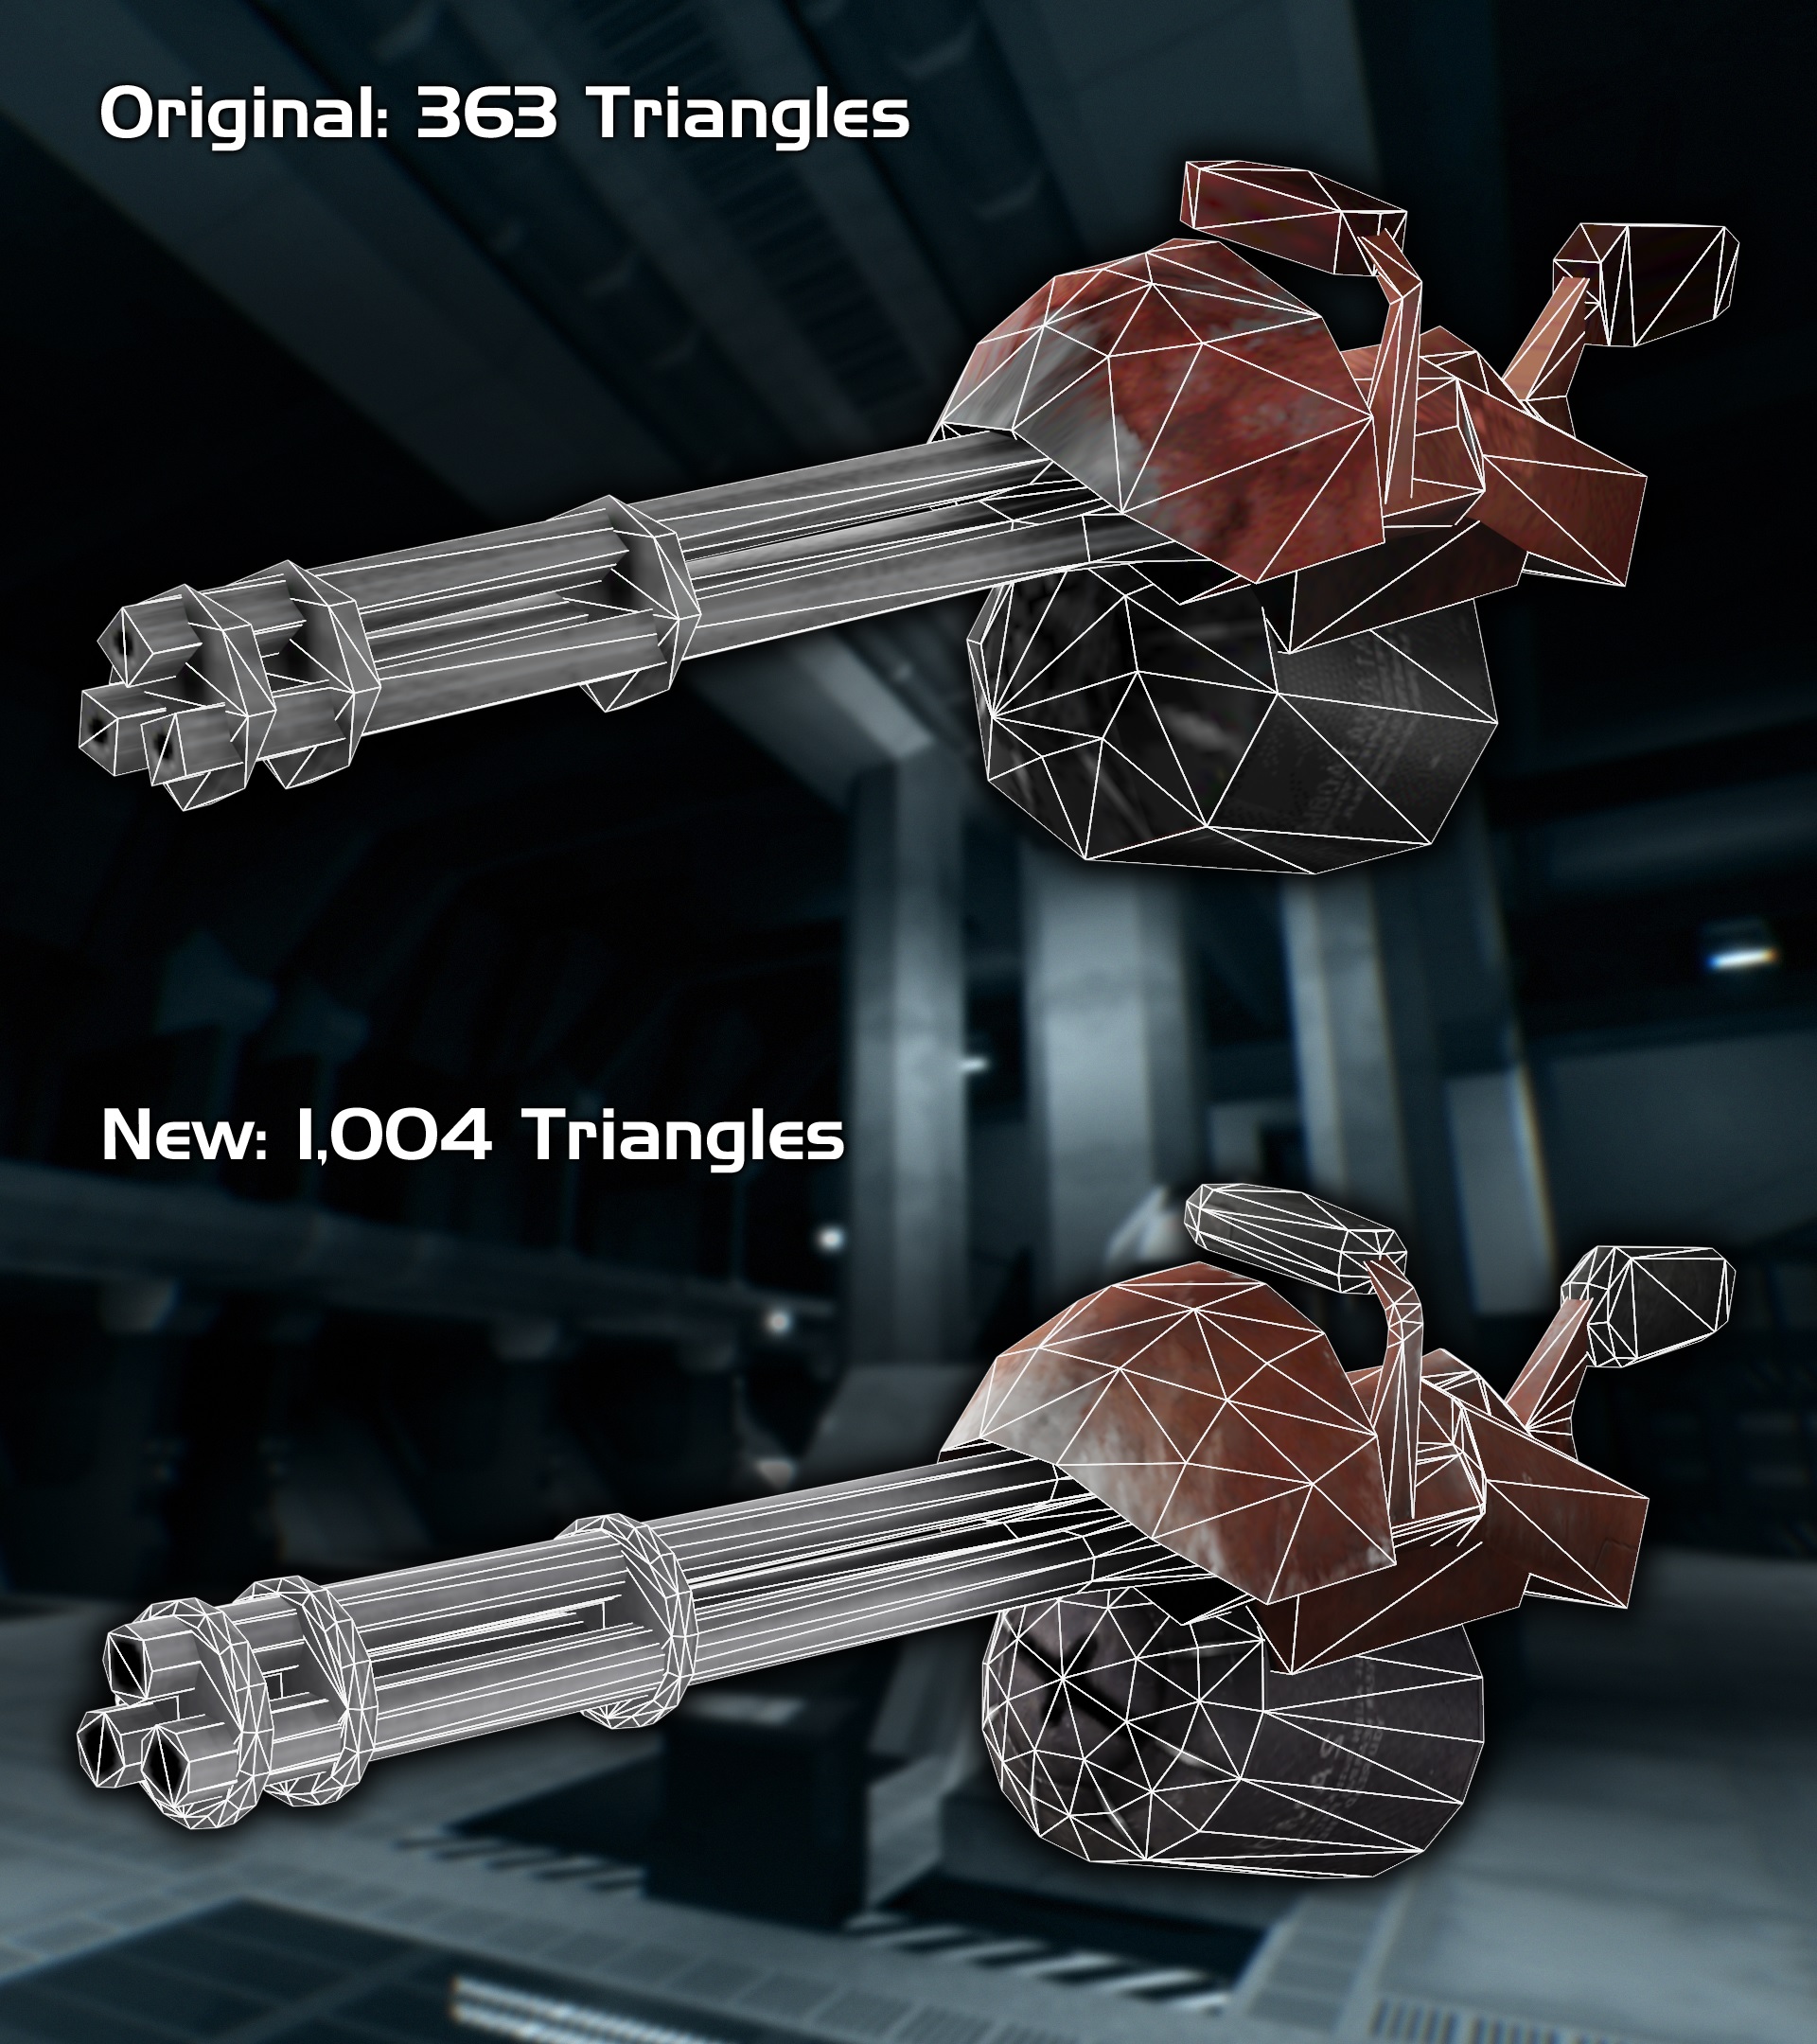 Ludus chaingun model comparison of triangle details